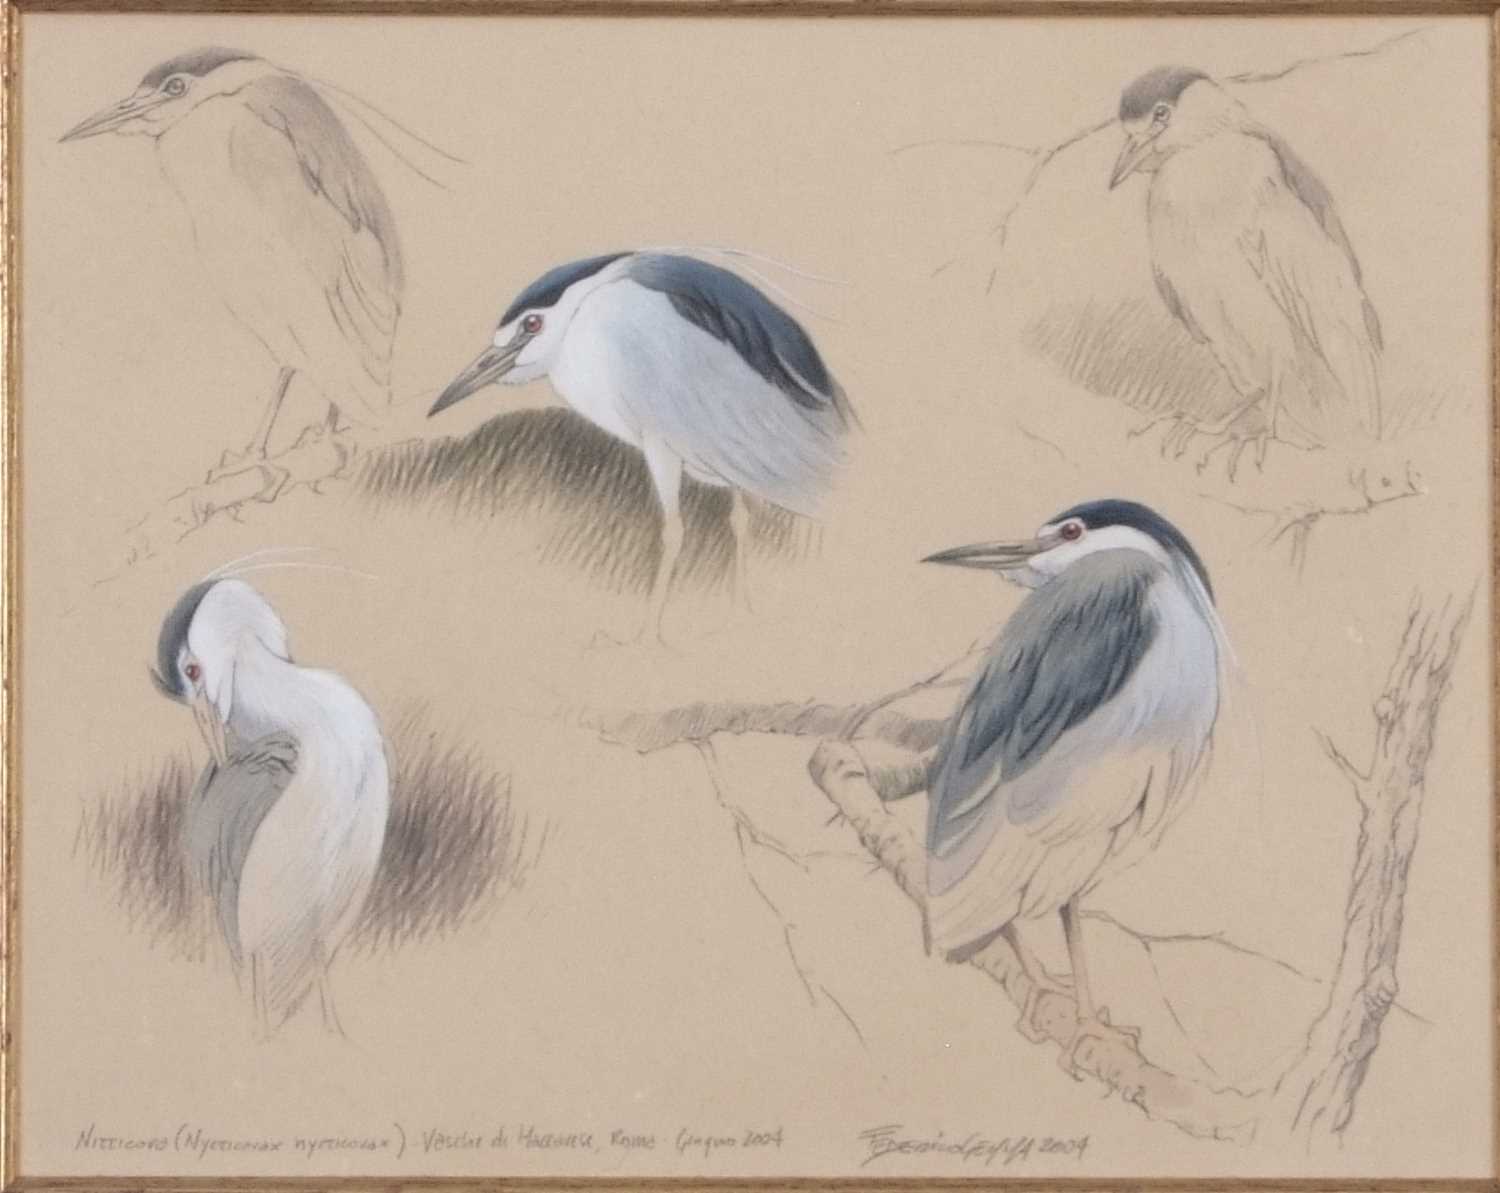 Federico Gemma SWLA (Italian, b.1970), 'Night Heron Studies' watercolour and pencil on paper, signed